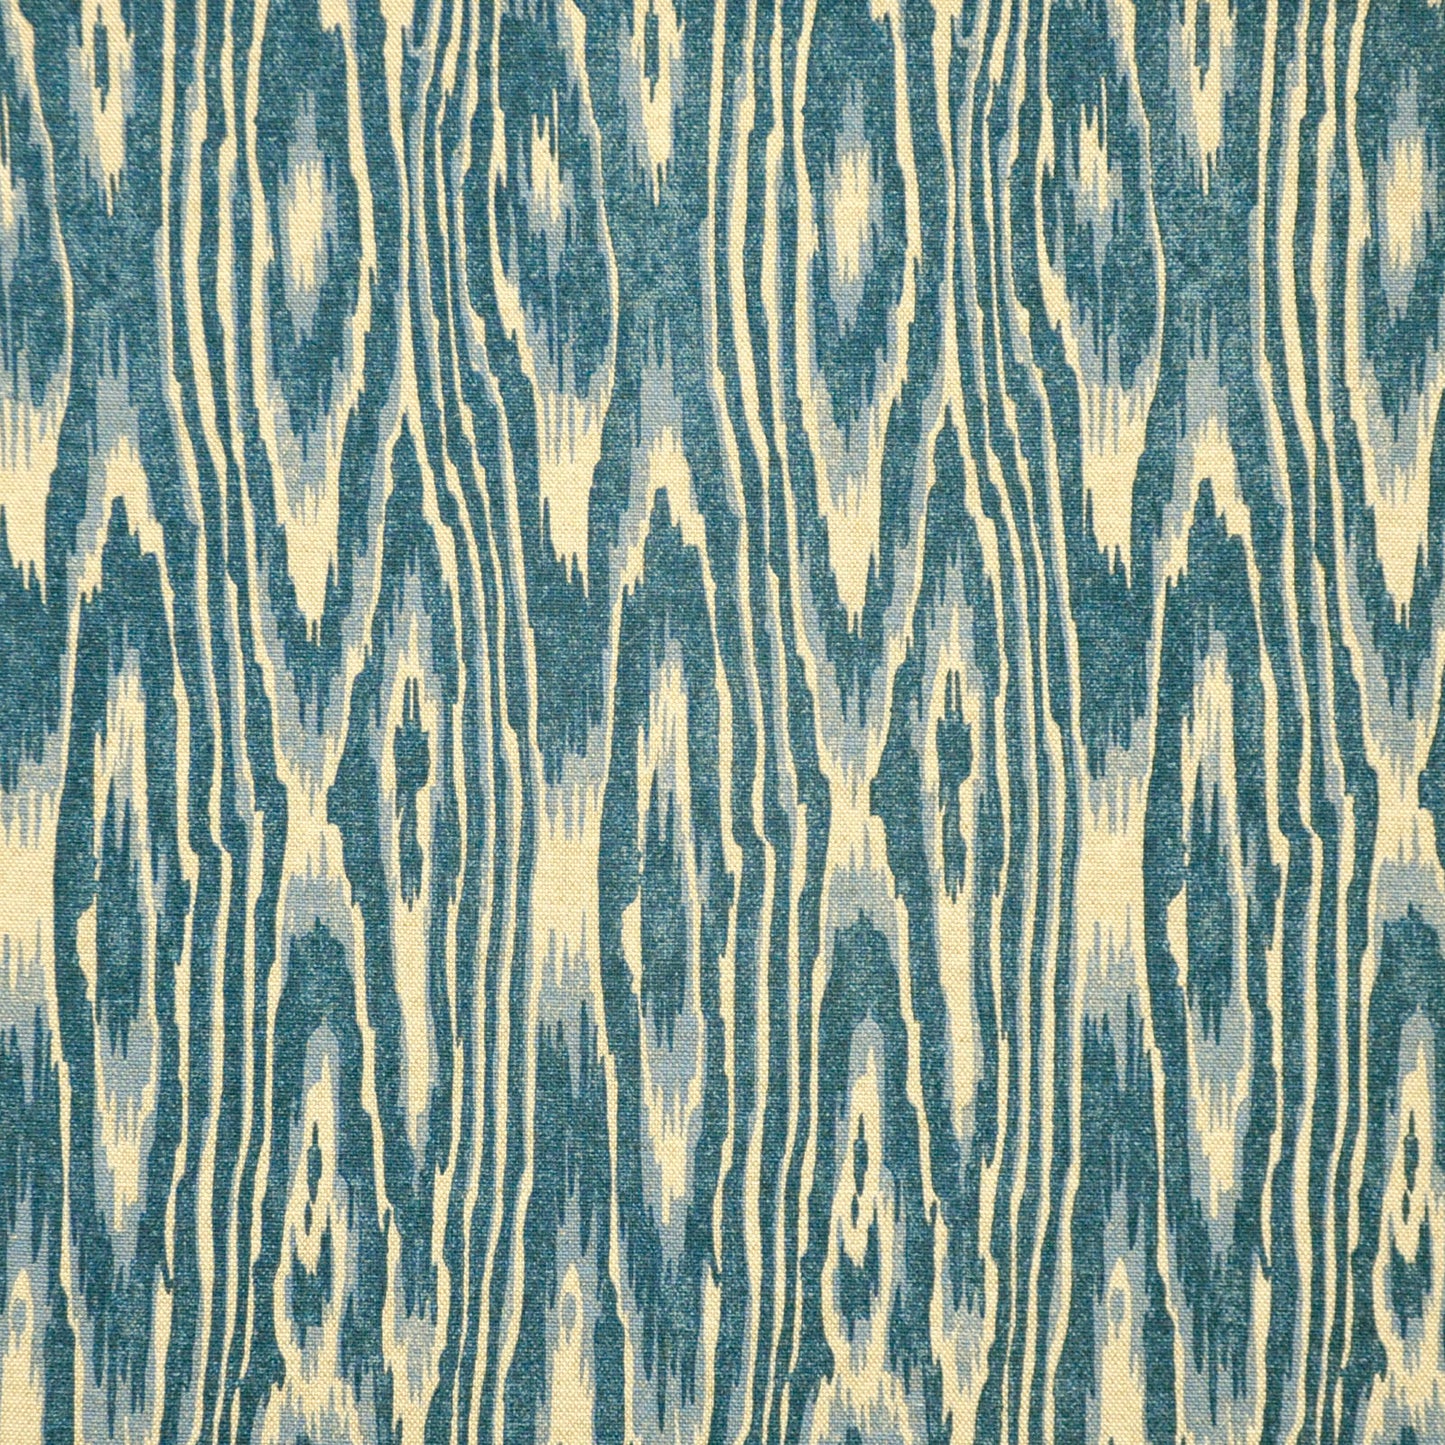 Purchase Maxwell Fabric - Bosco, # 540 Bluebell